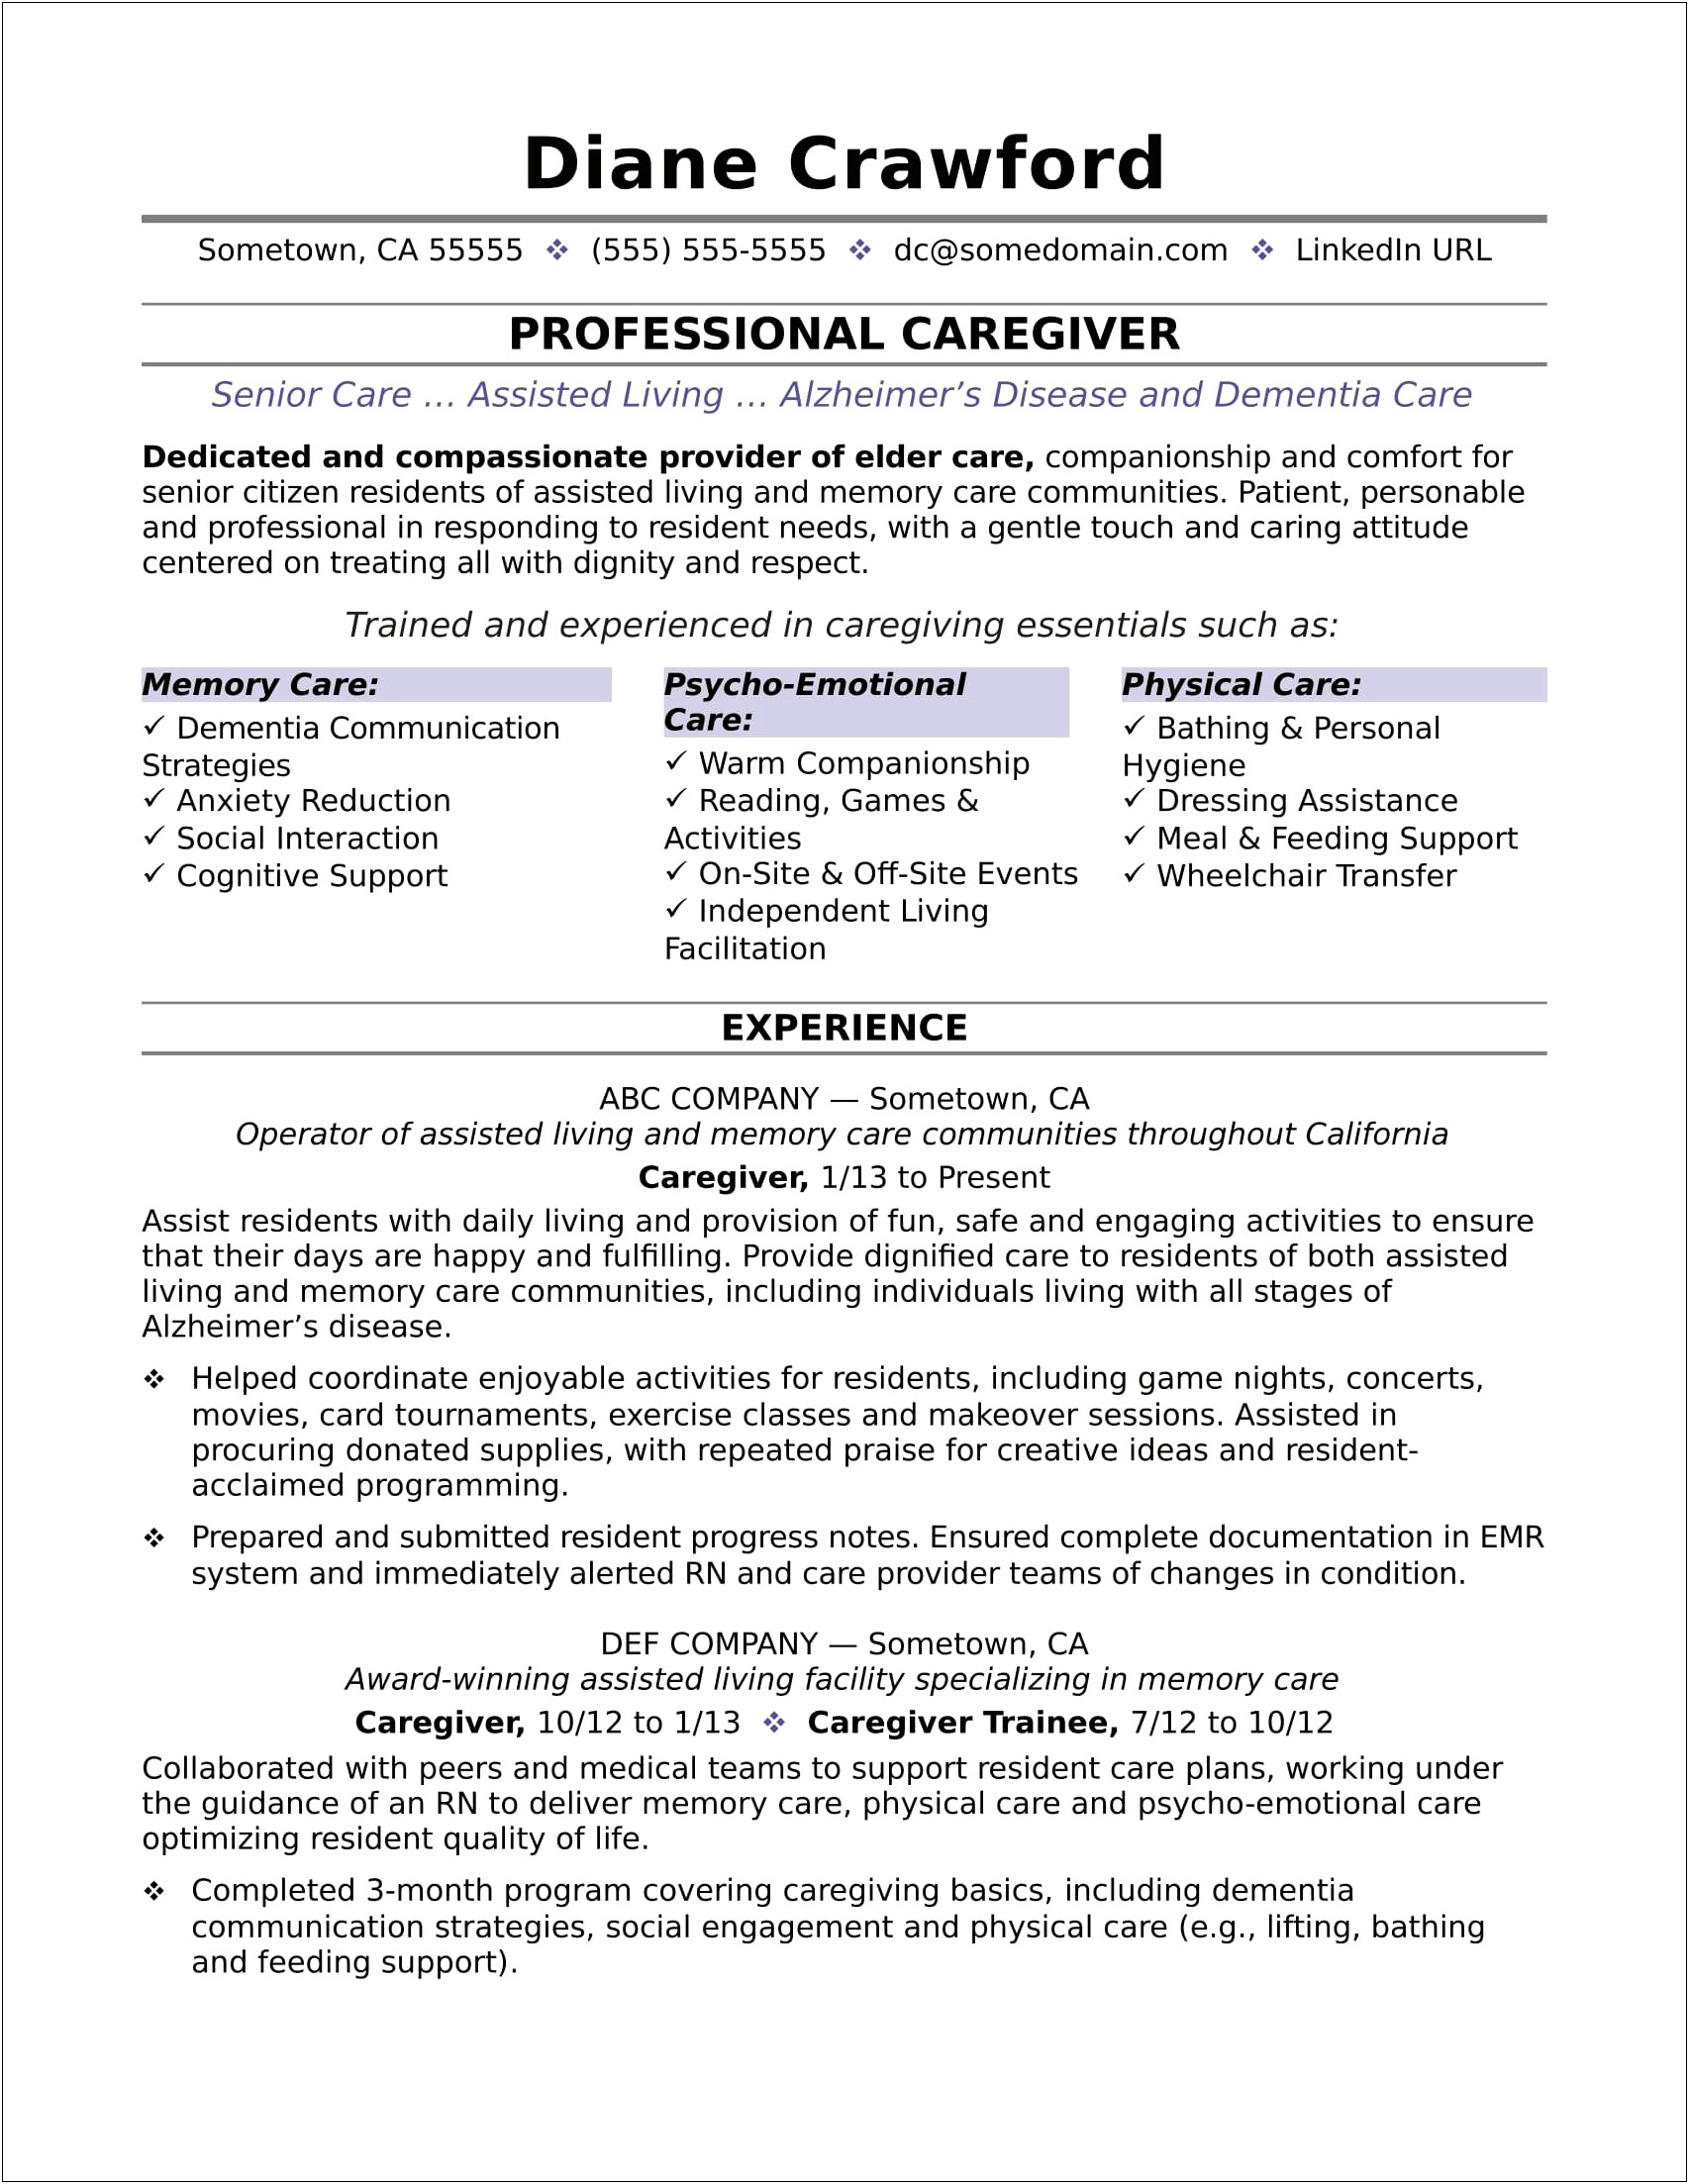 Theme Park Worker And Job Description For Resume